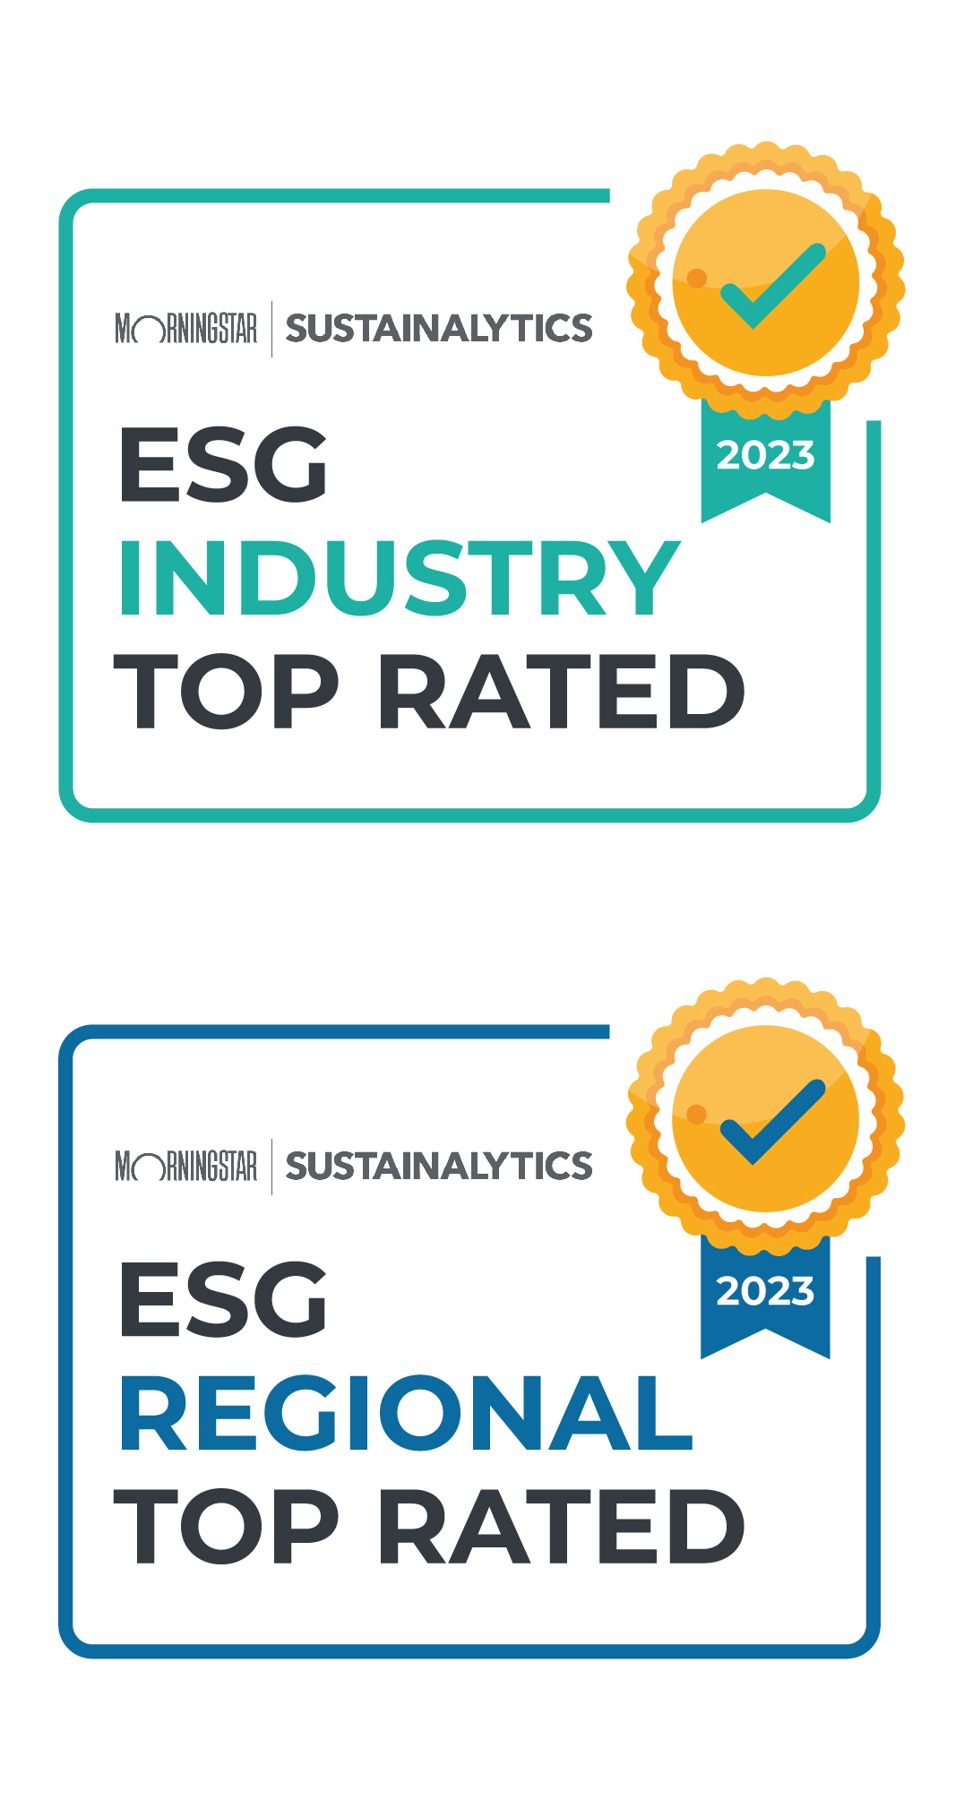 Sustainalytics 2023 badges combined